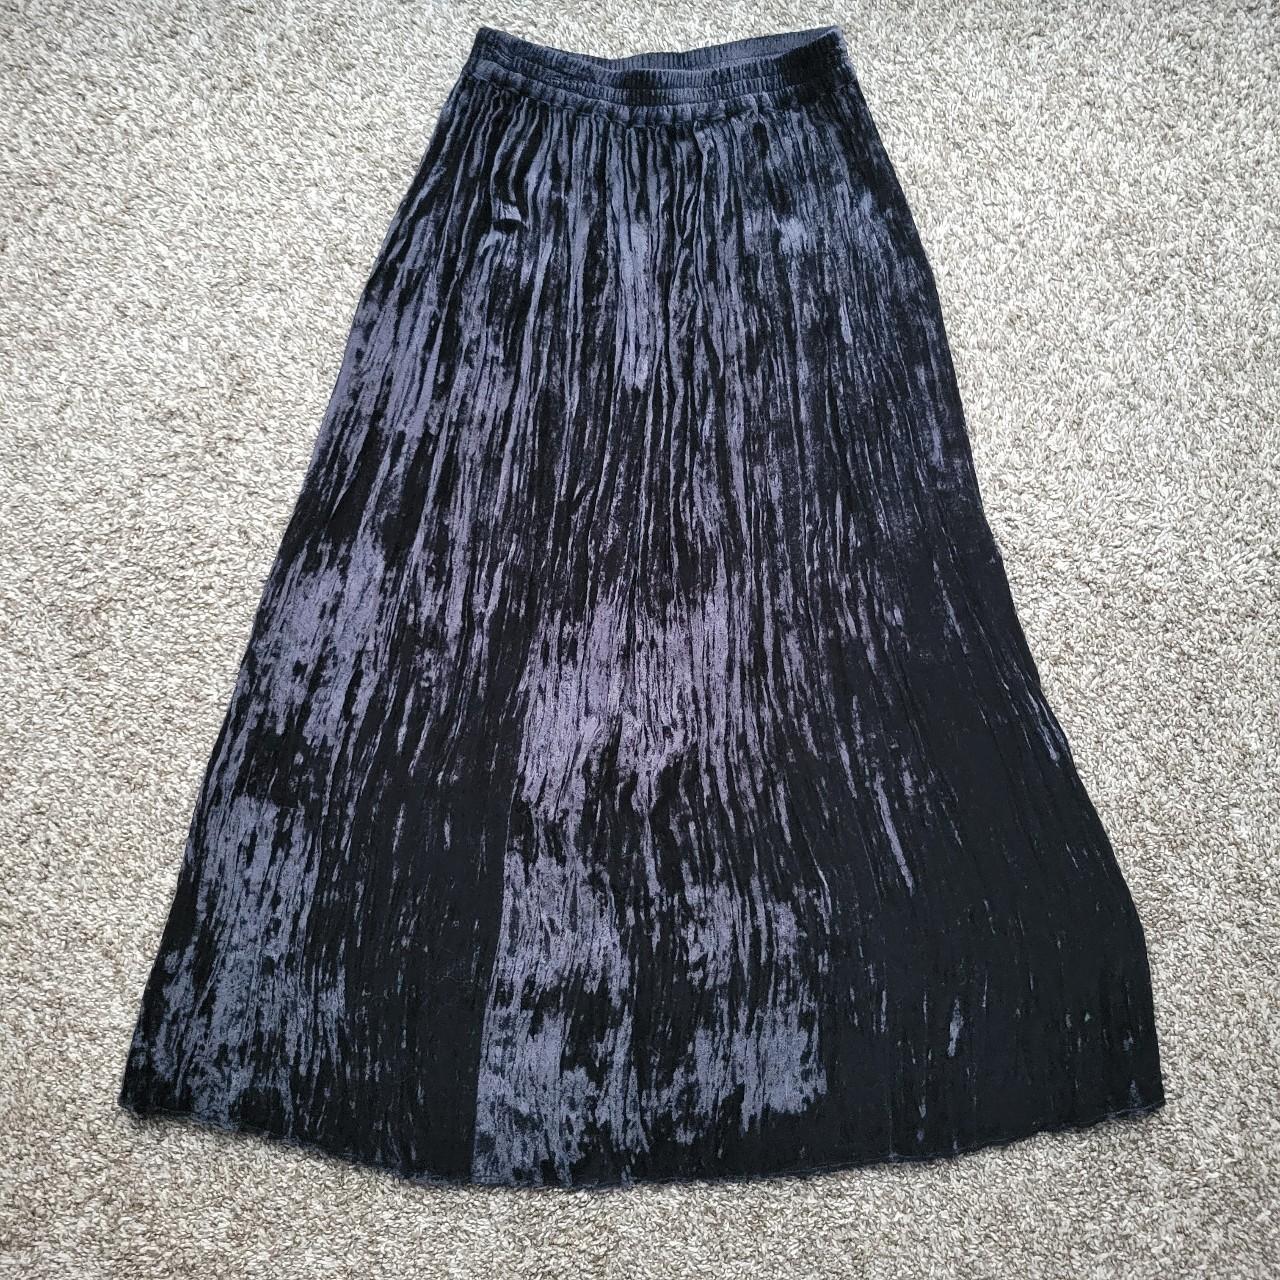 Gorgeous Vintage Black Velvet Maxi Skirt! Size M,... - Depop